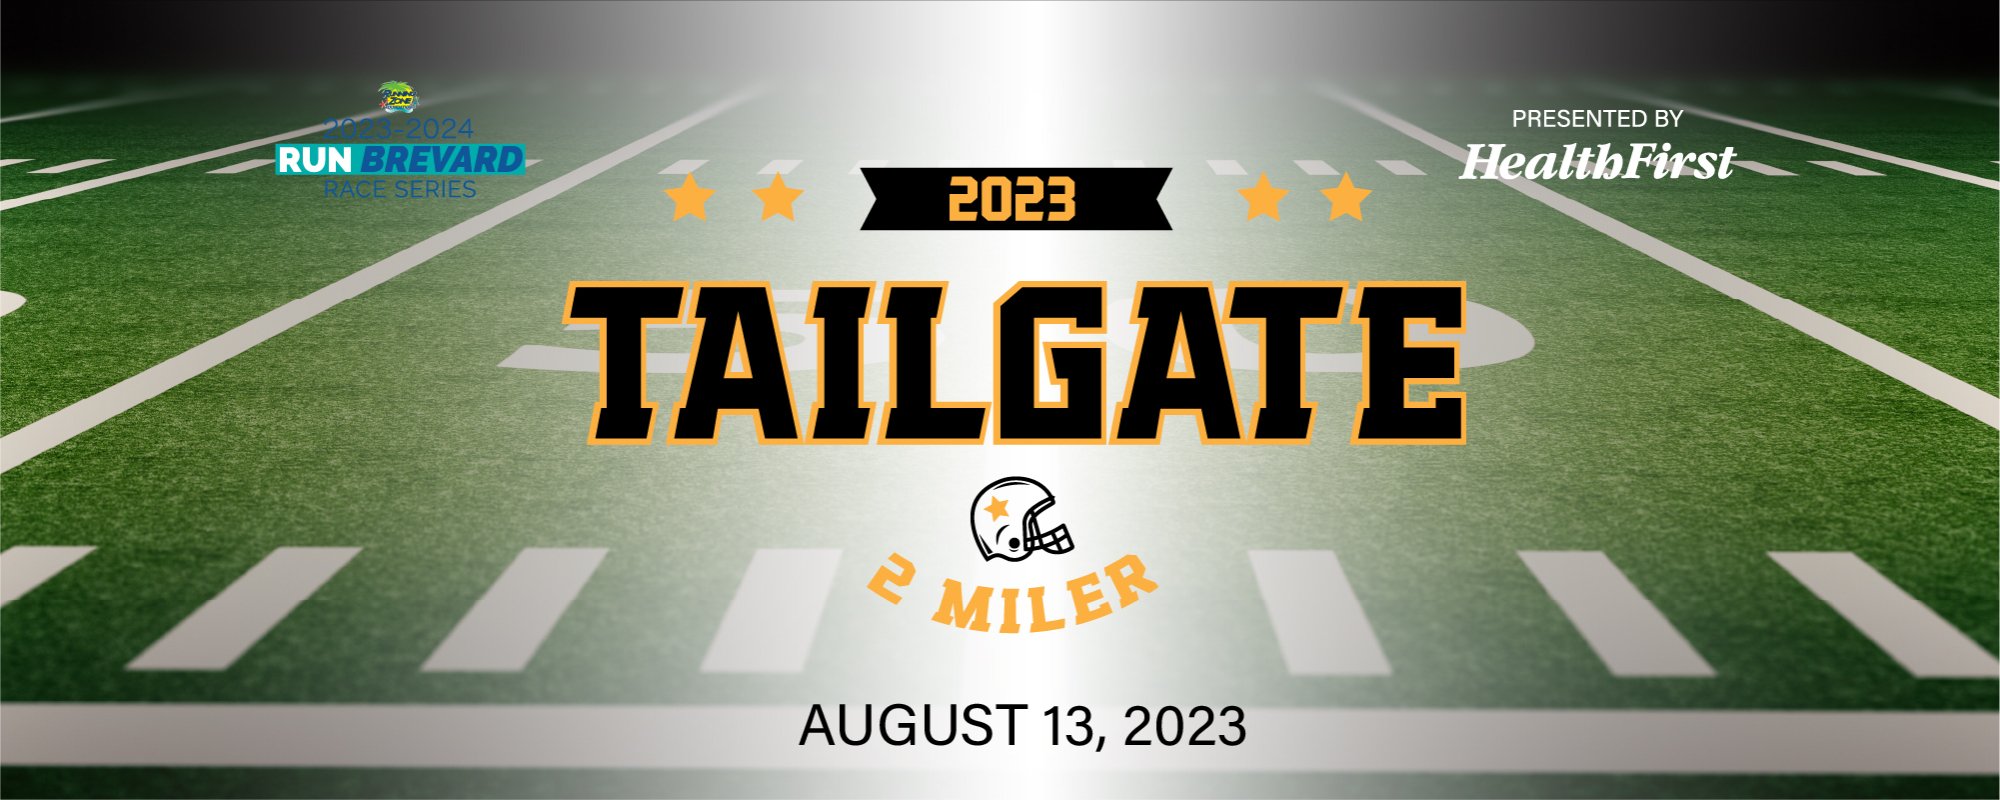 Tailgate 2 miler 2023 August 13-2023